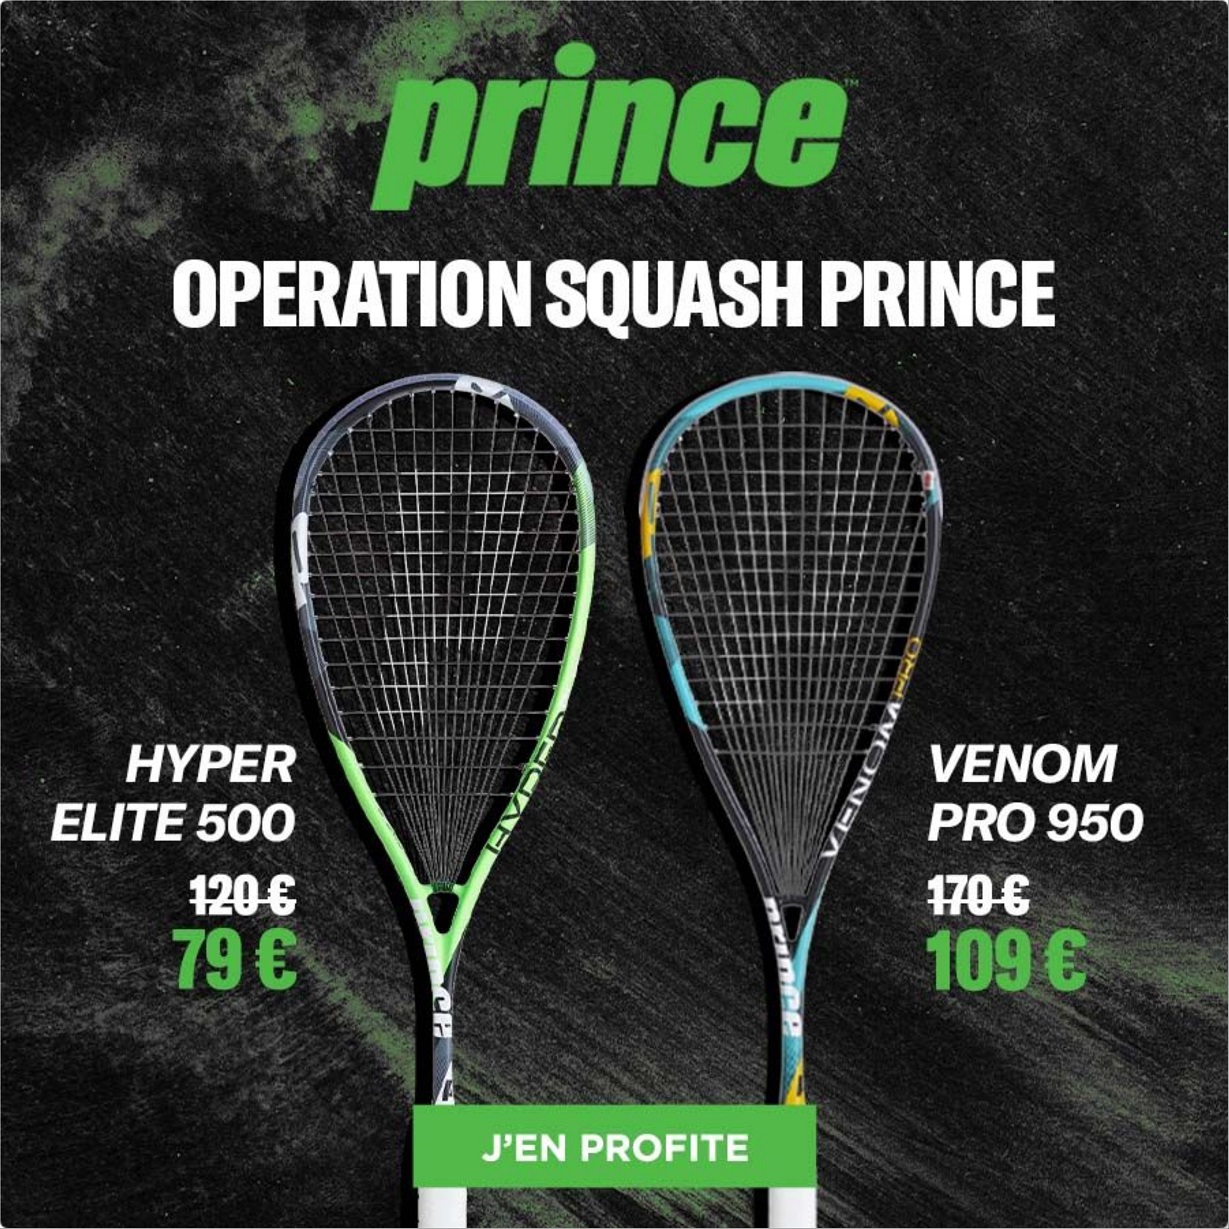 https://www.protennis.fr/blog/wp-content/uploads/2022/07/offre-raquette-squash-prince-protennis.jpg